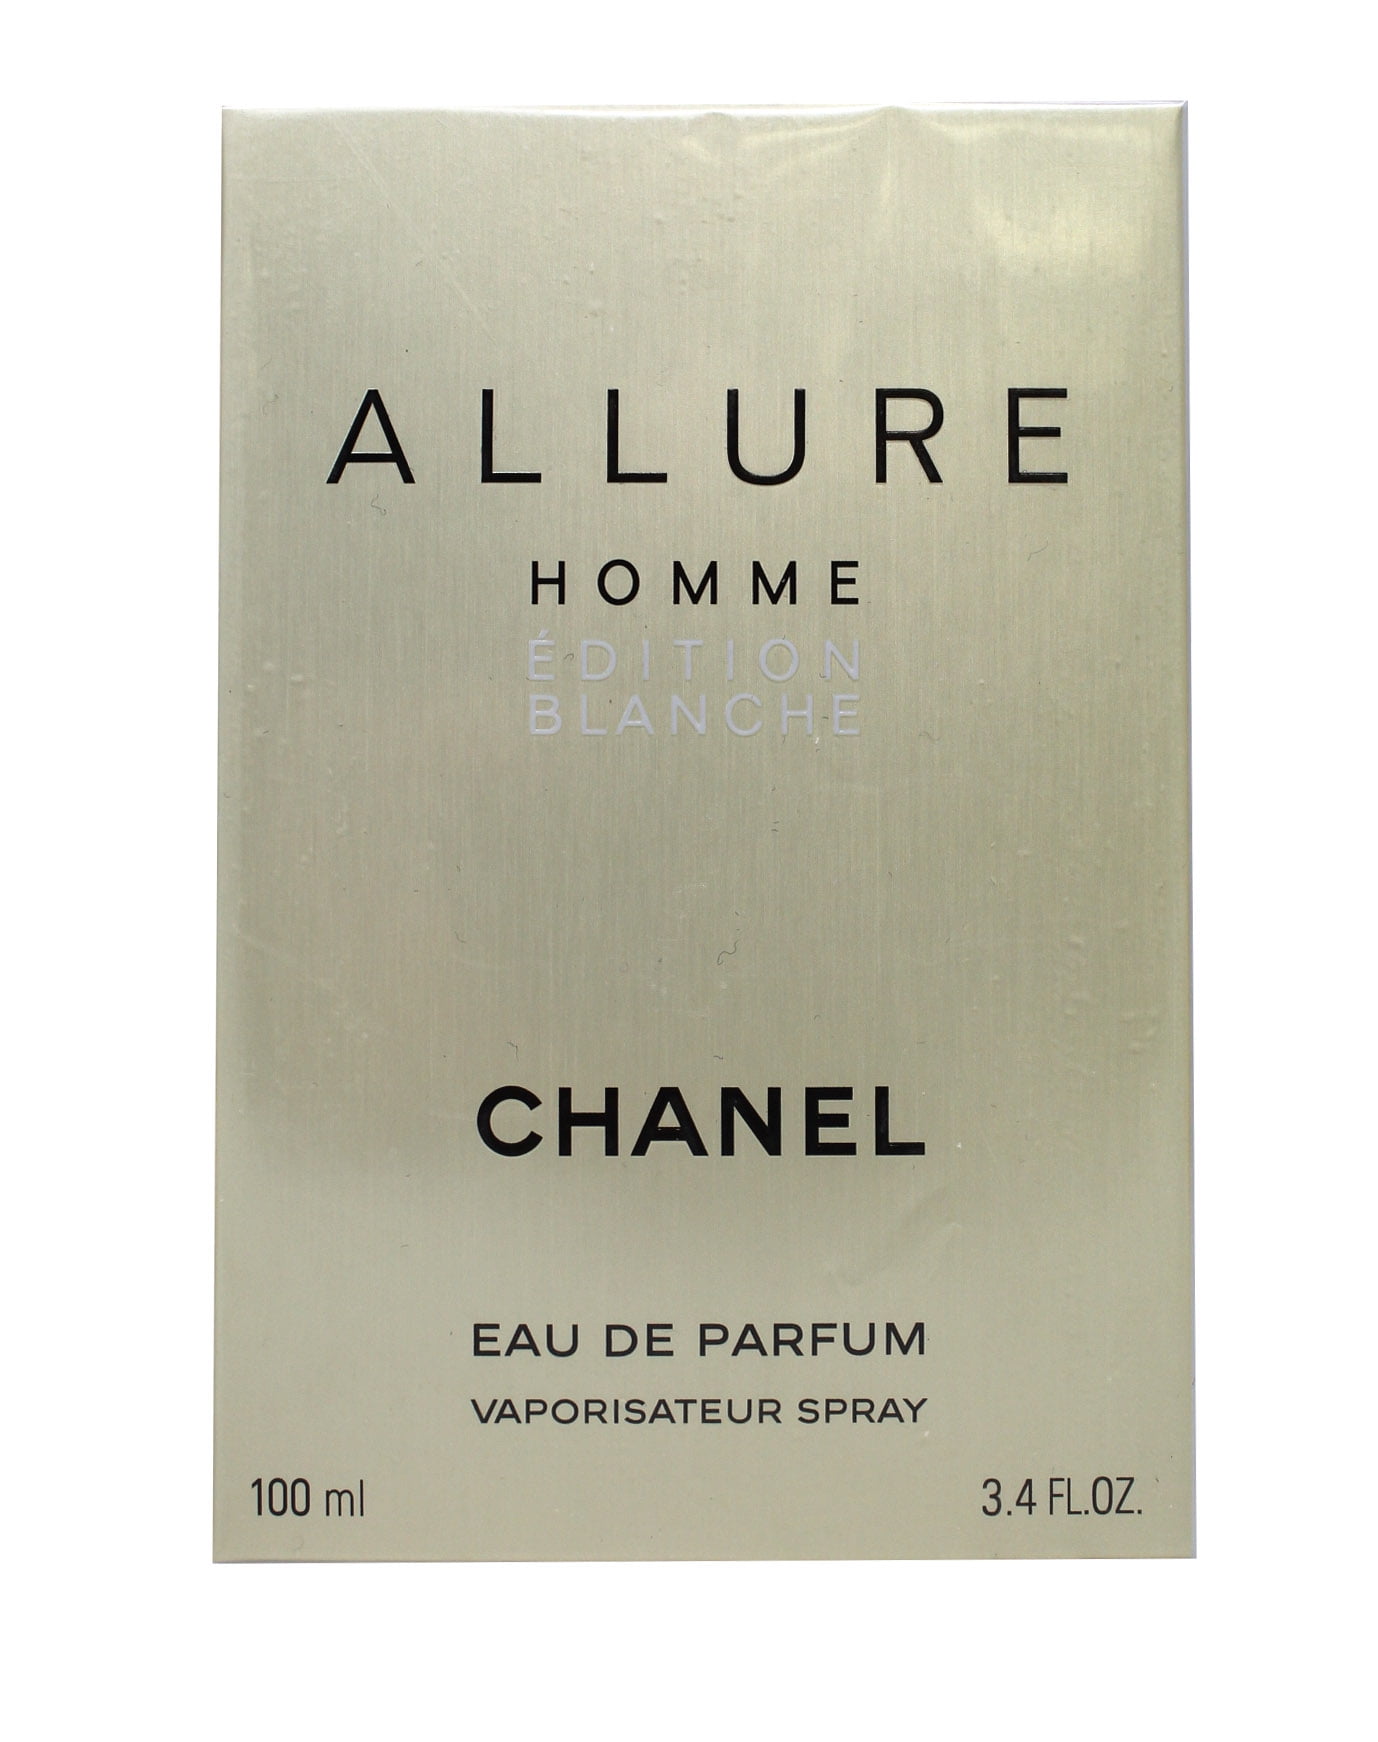 CHANEL  Allure Homme Edition Blanche EDP 10ml  Eros Perfume